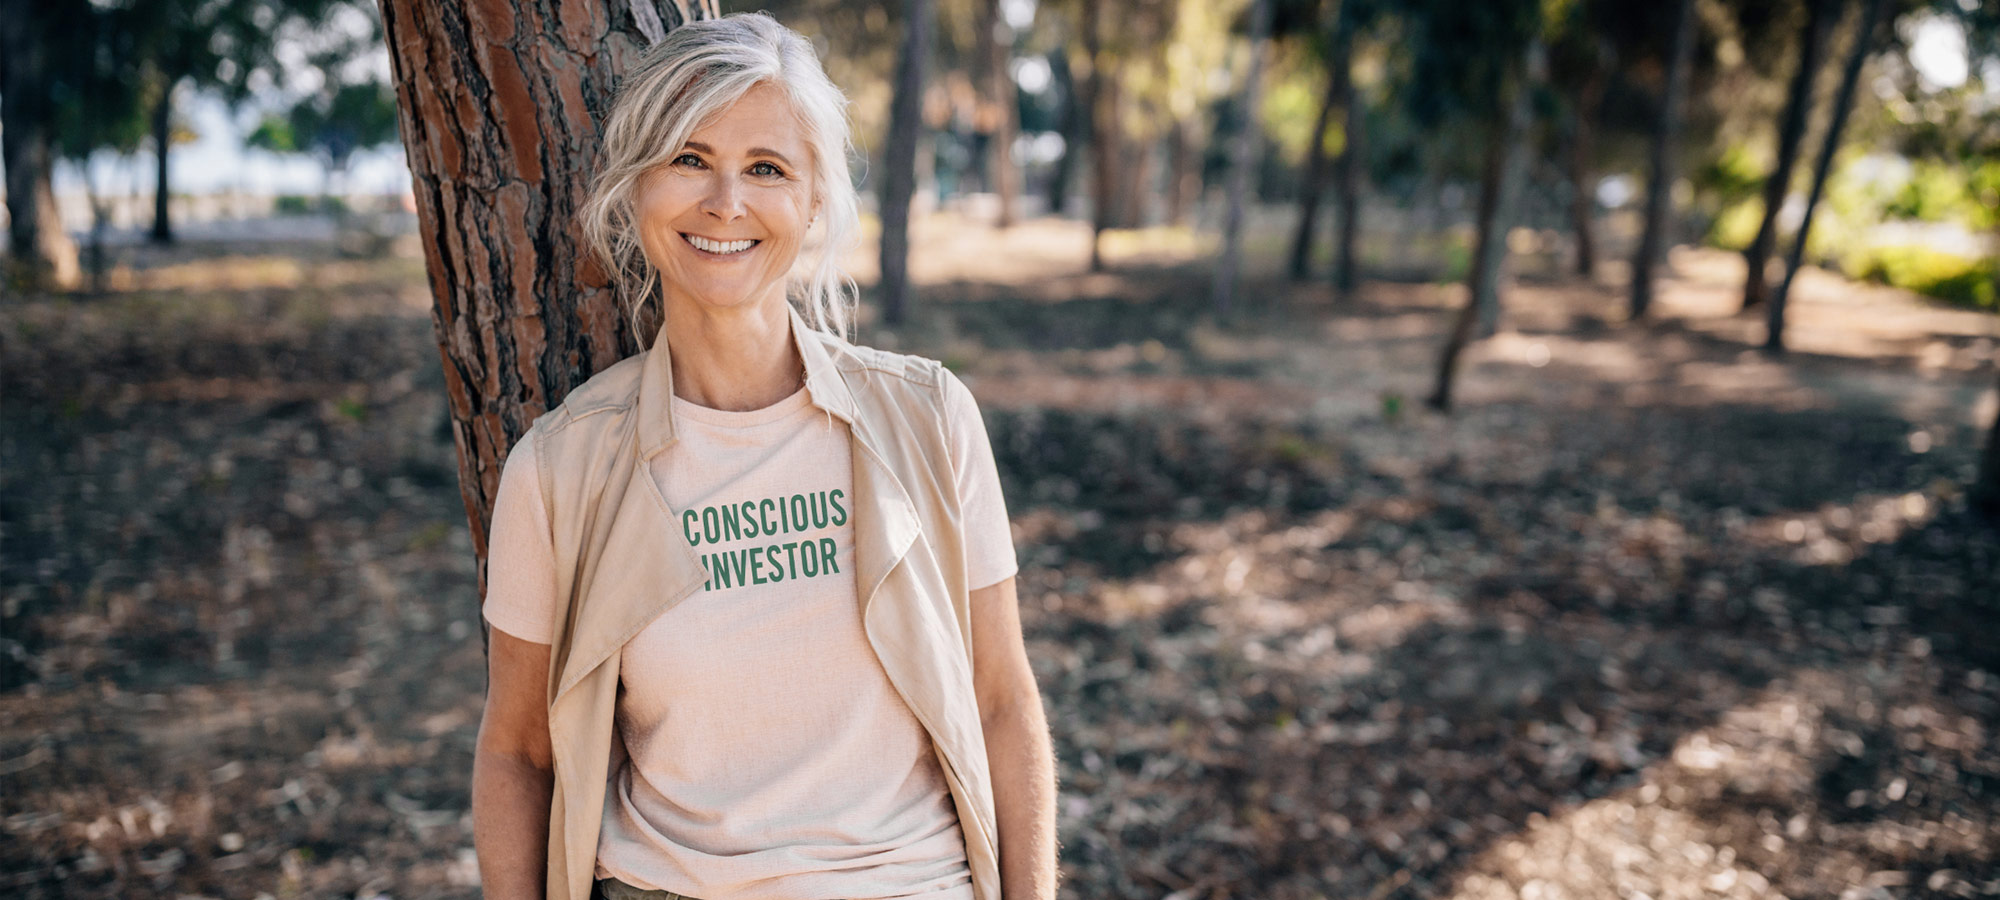 investor-shirt-lady.jpg